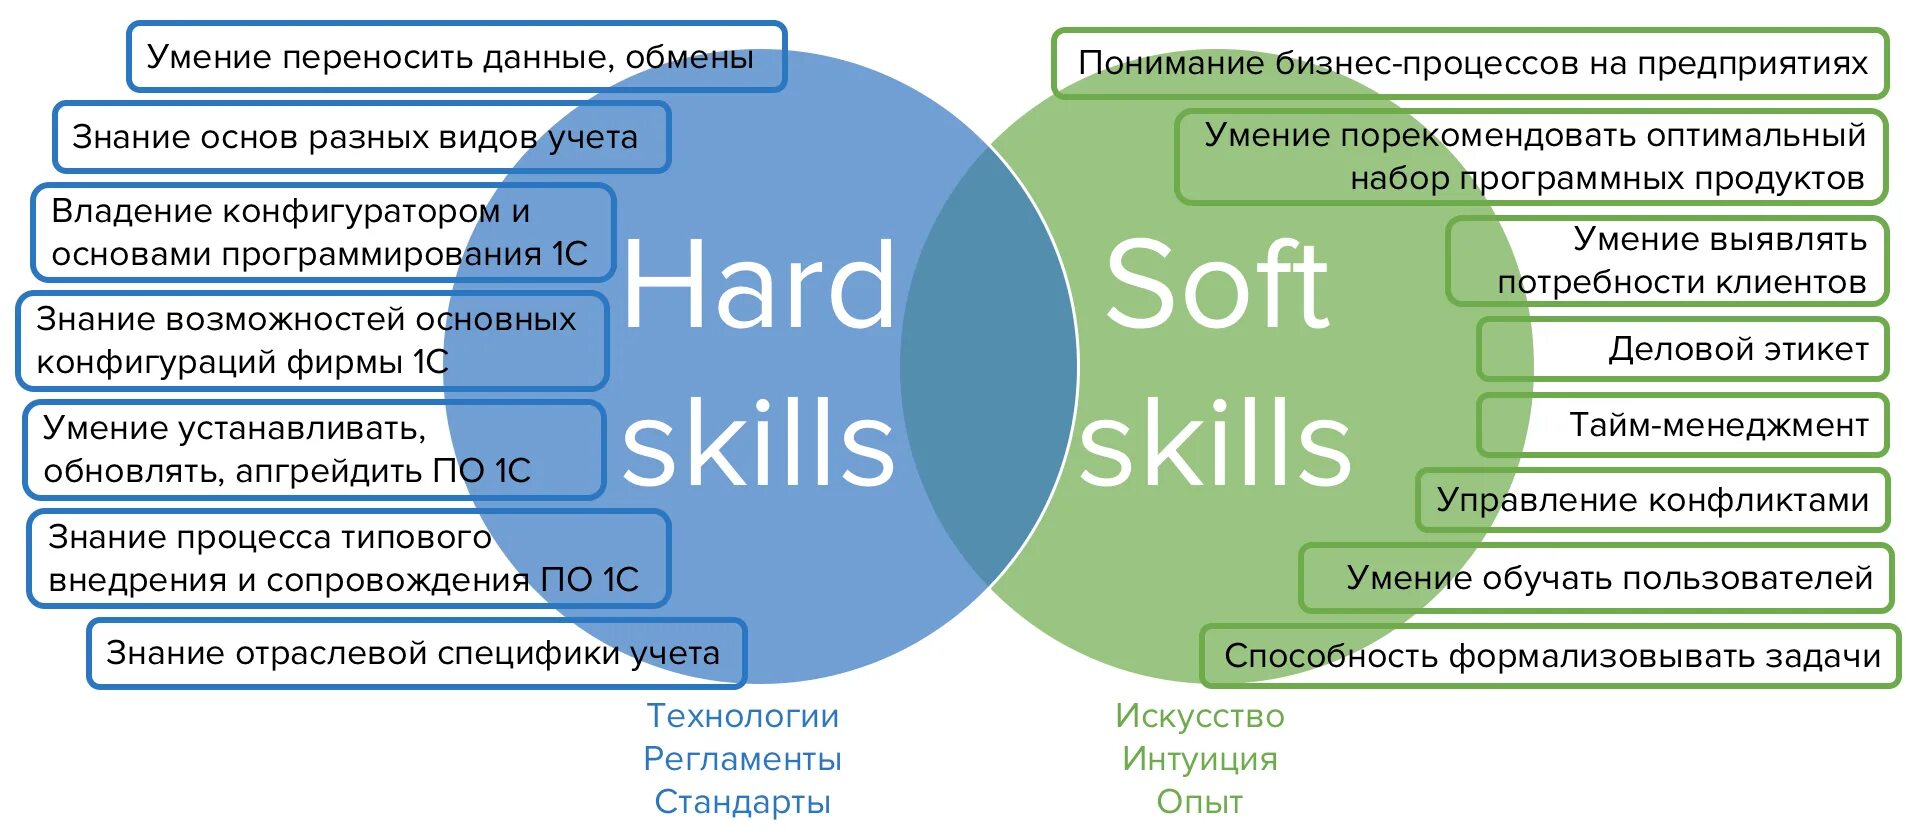 Какая наименее эффективная. Hard skills и Soft skills. Навыки Хард и софт Скиллс. Компетенции педагога hard skills Soft skills. Софт и Хард компетенции.